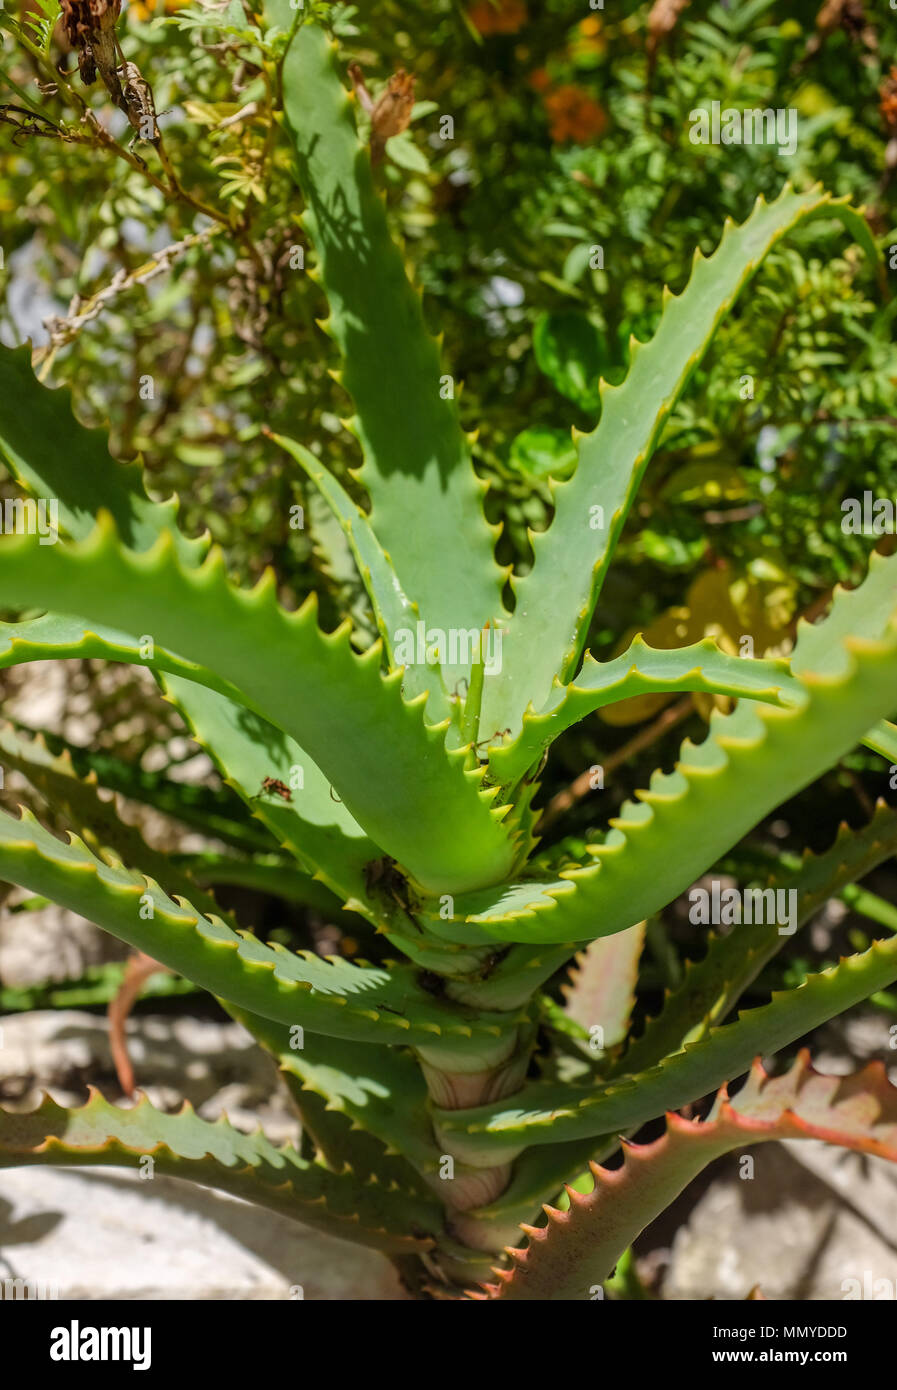 Antigua Lesser Antilles islands in the Caribbean West Indies - Aloe Vera plant growing Stock Photo